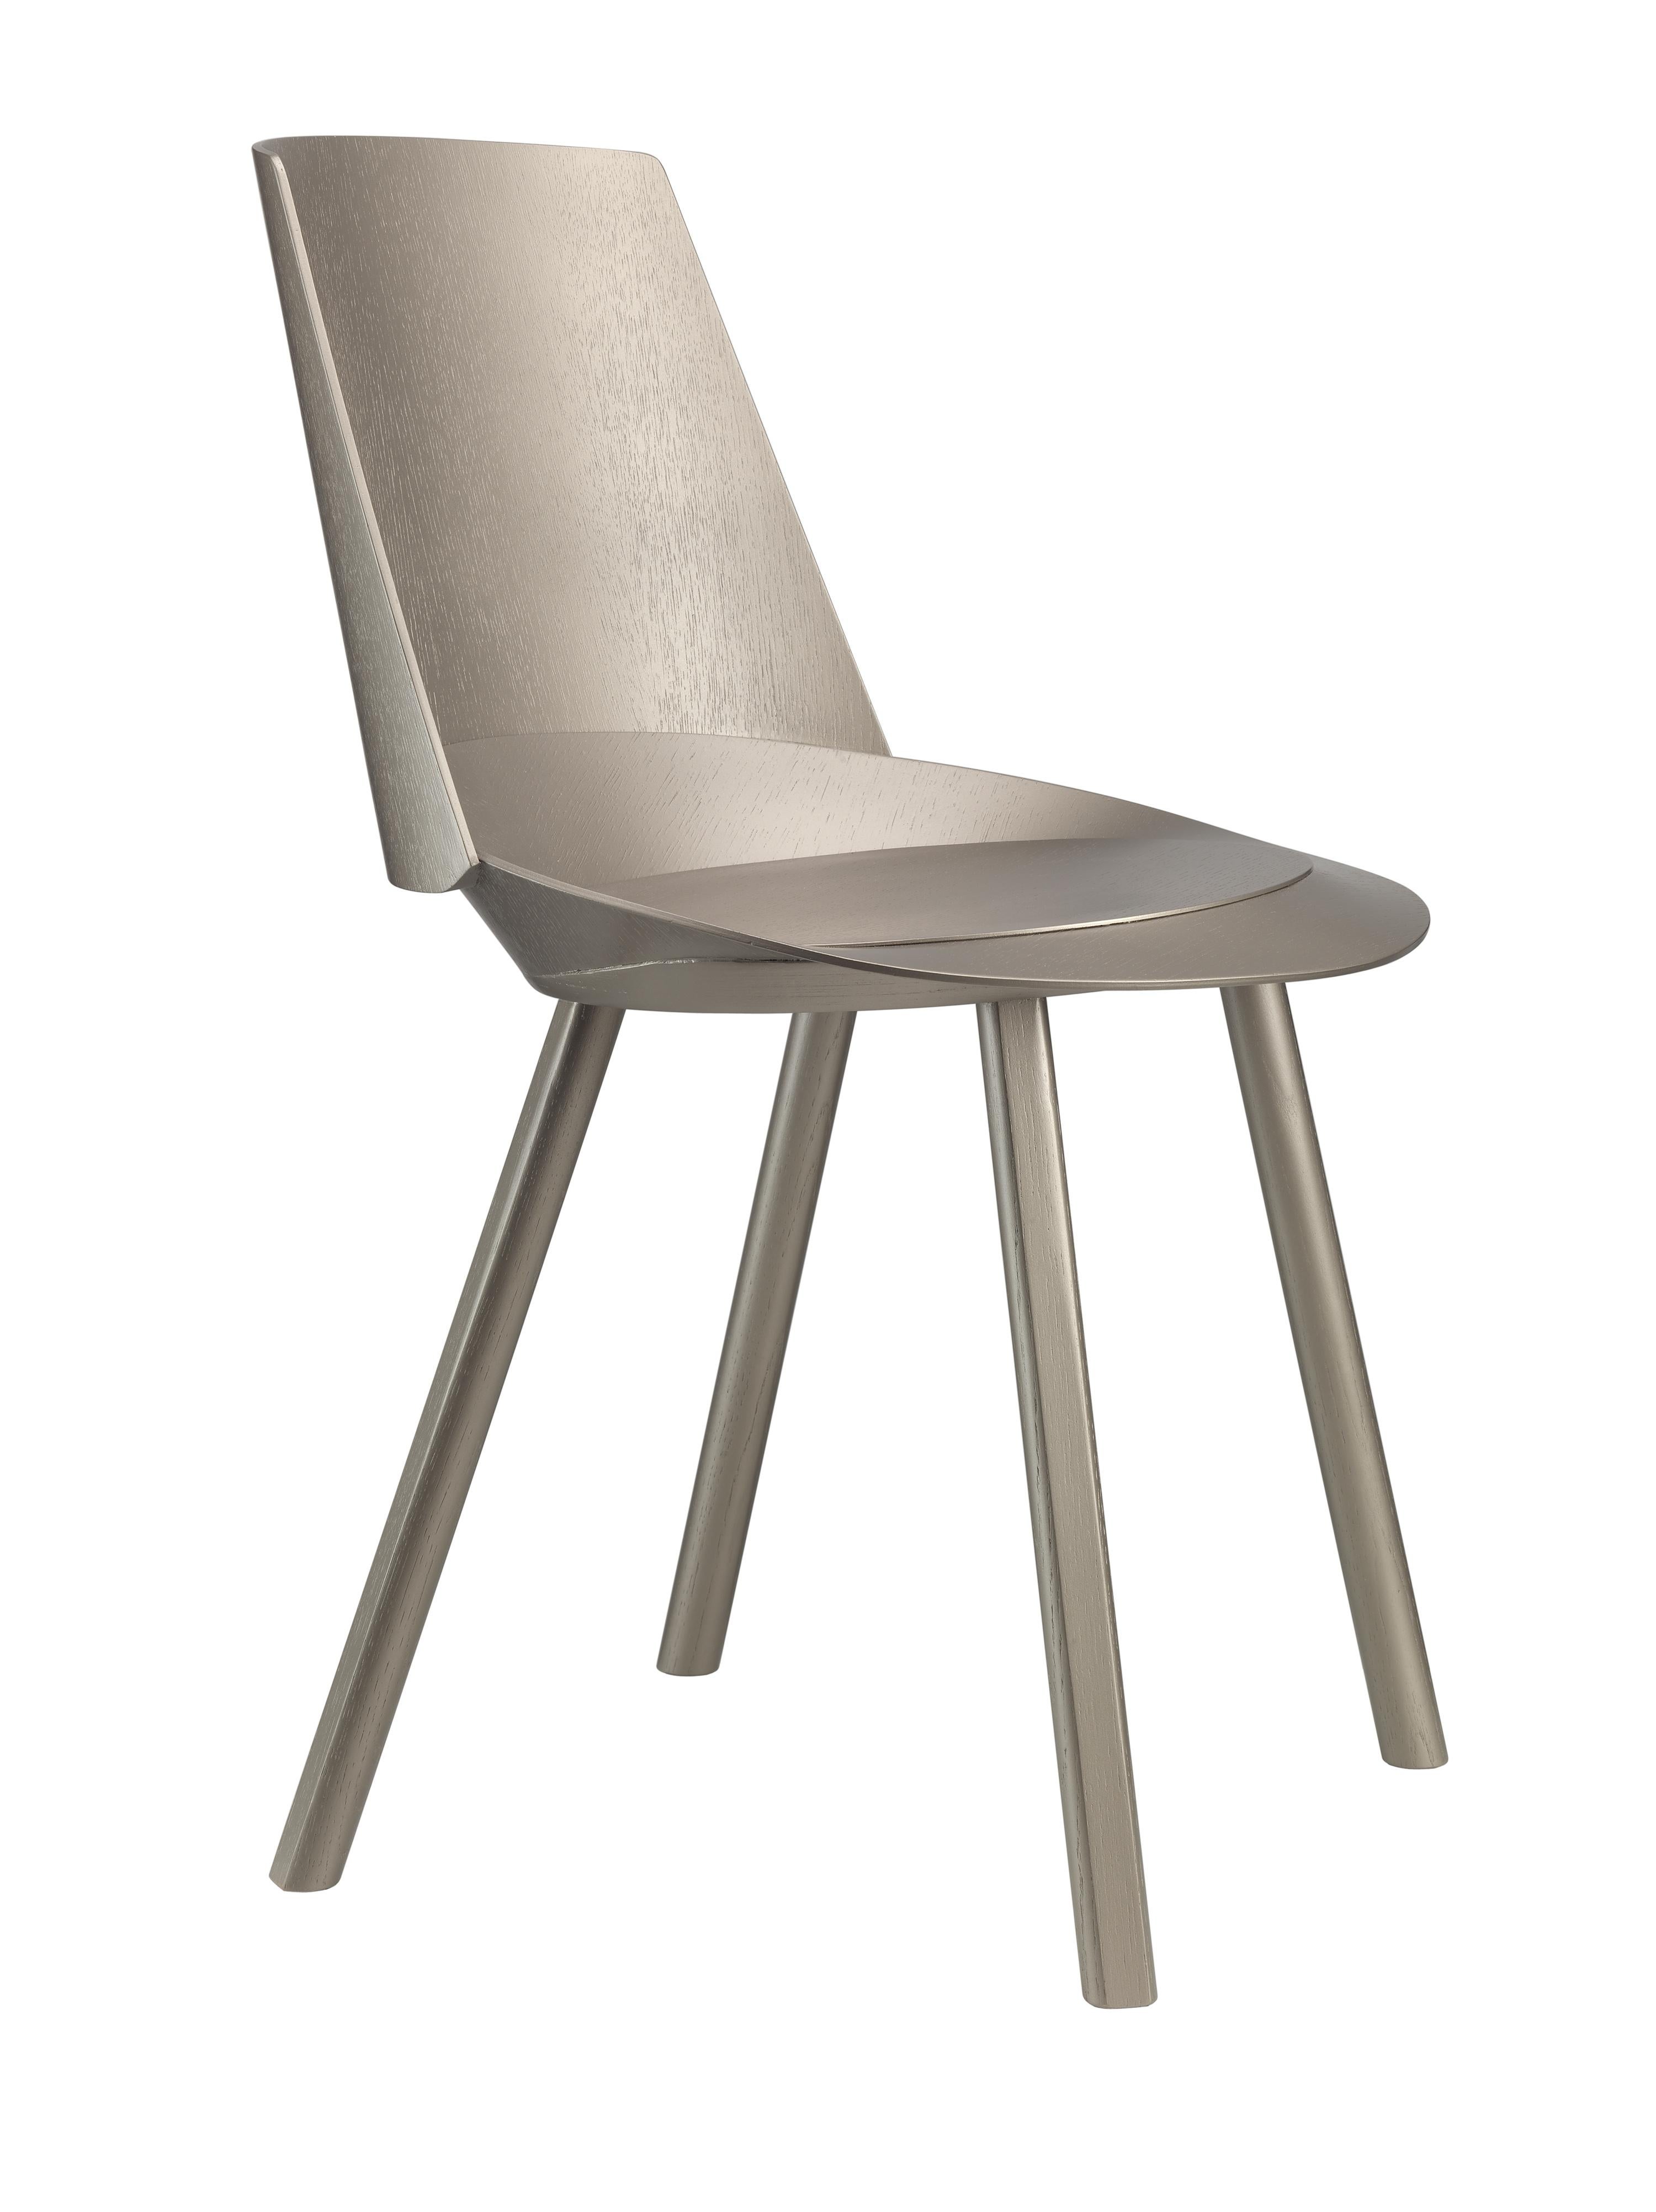 Wood e15 Customizable Houdini Side Chair by Stefan Diez For Sale